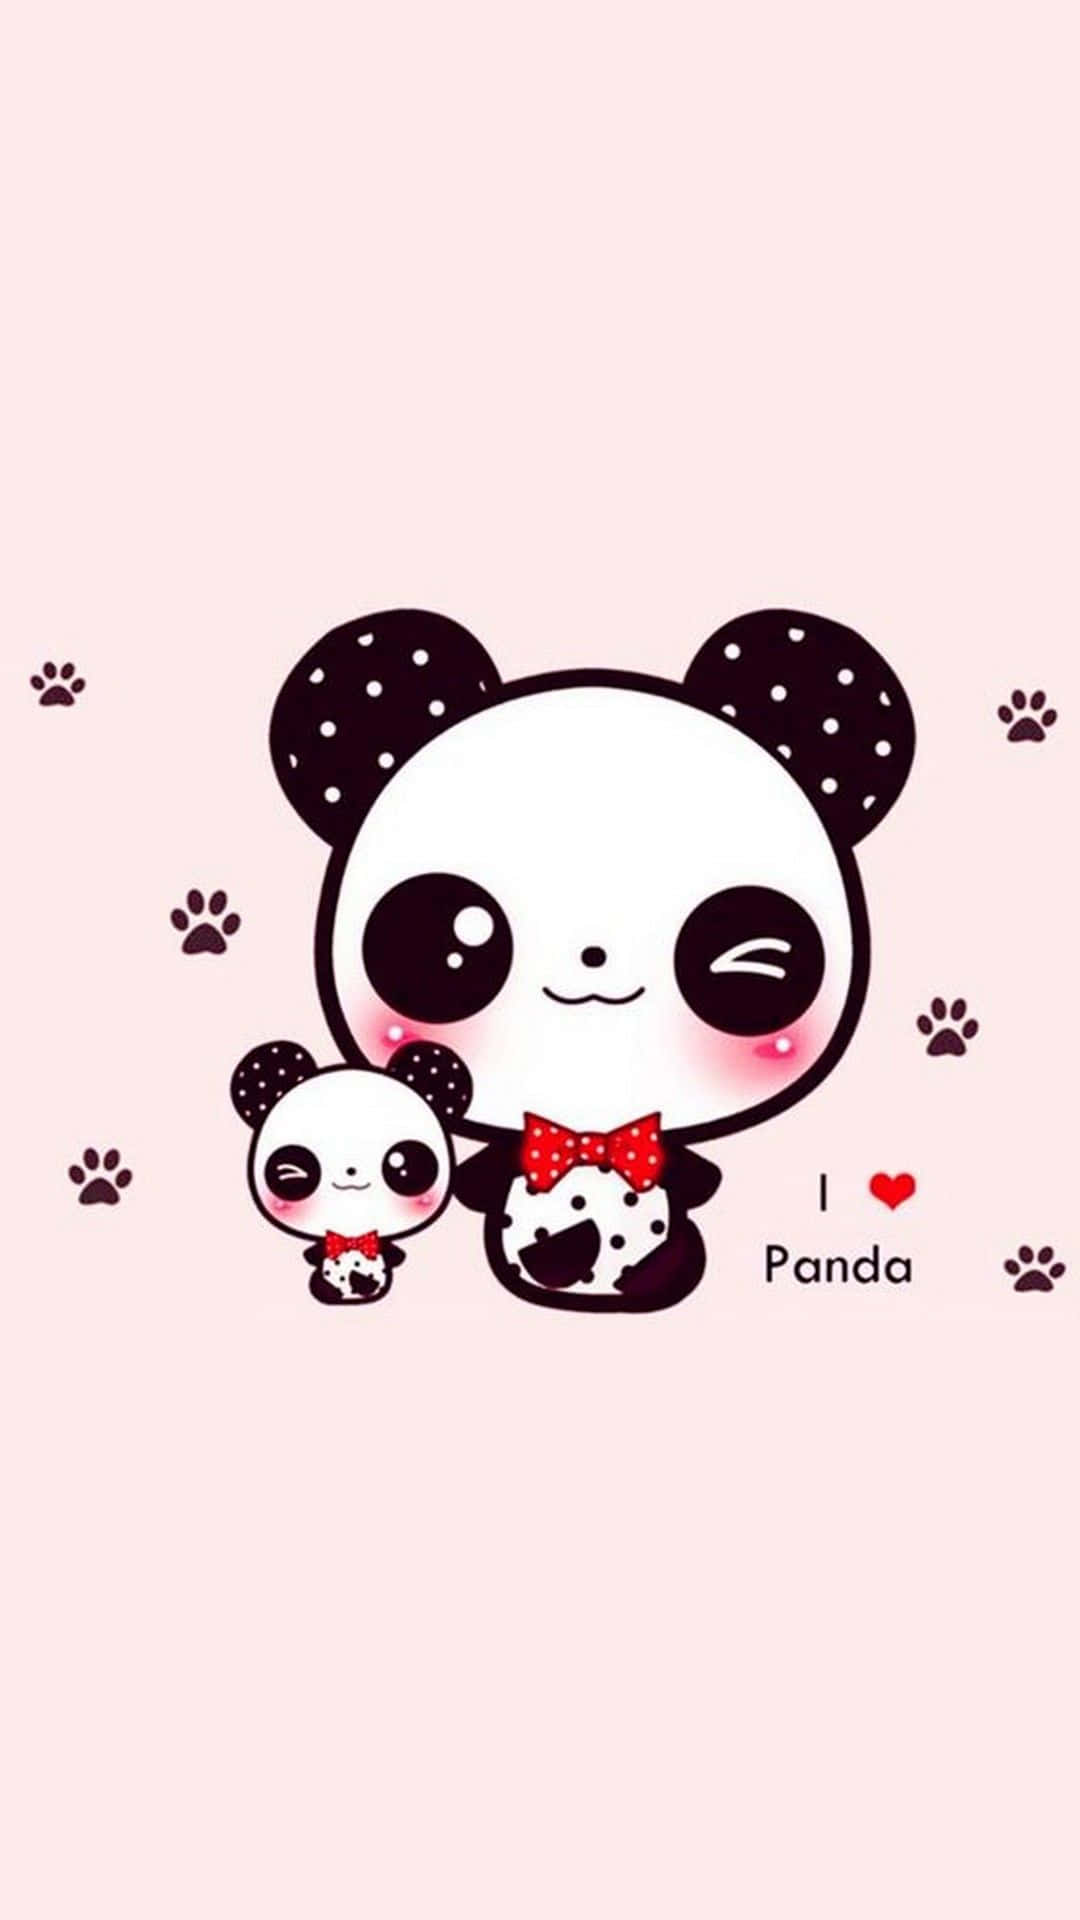 Panda Wallpapers – Panda Pictures & Panda Images by Pocket Books